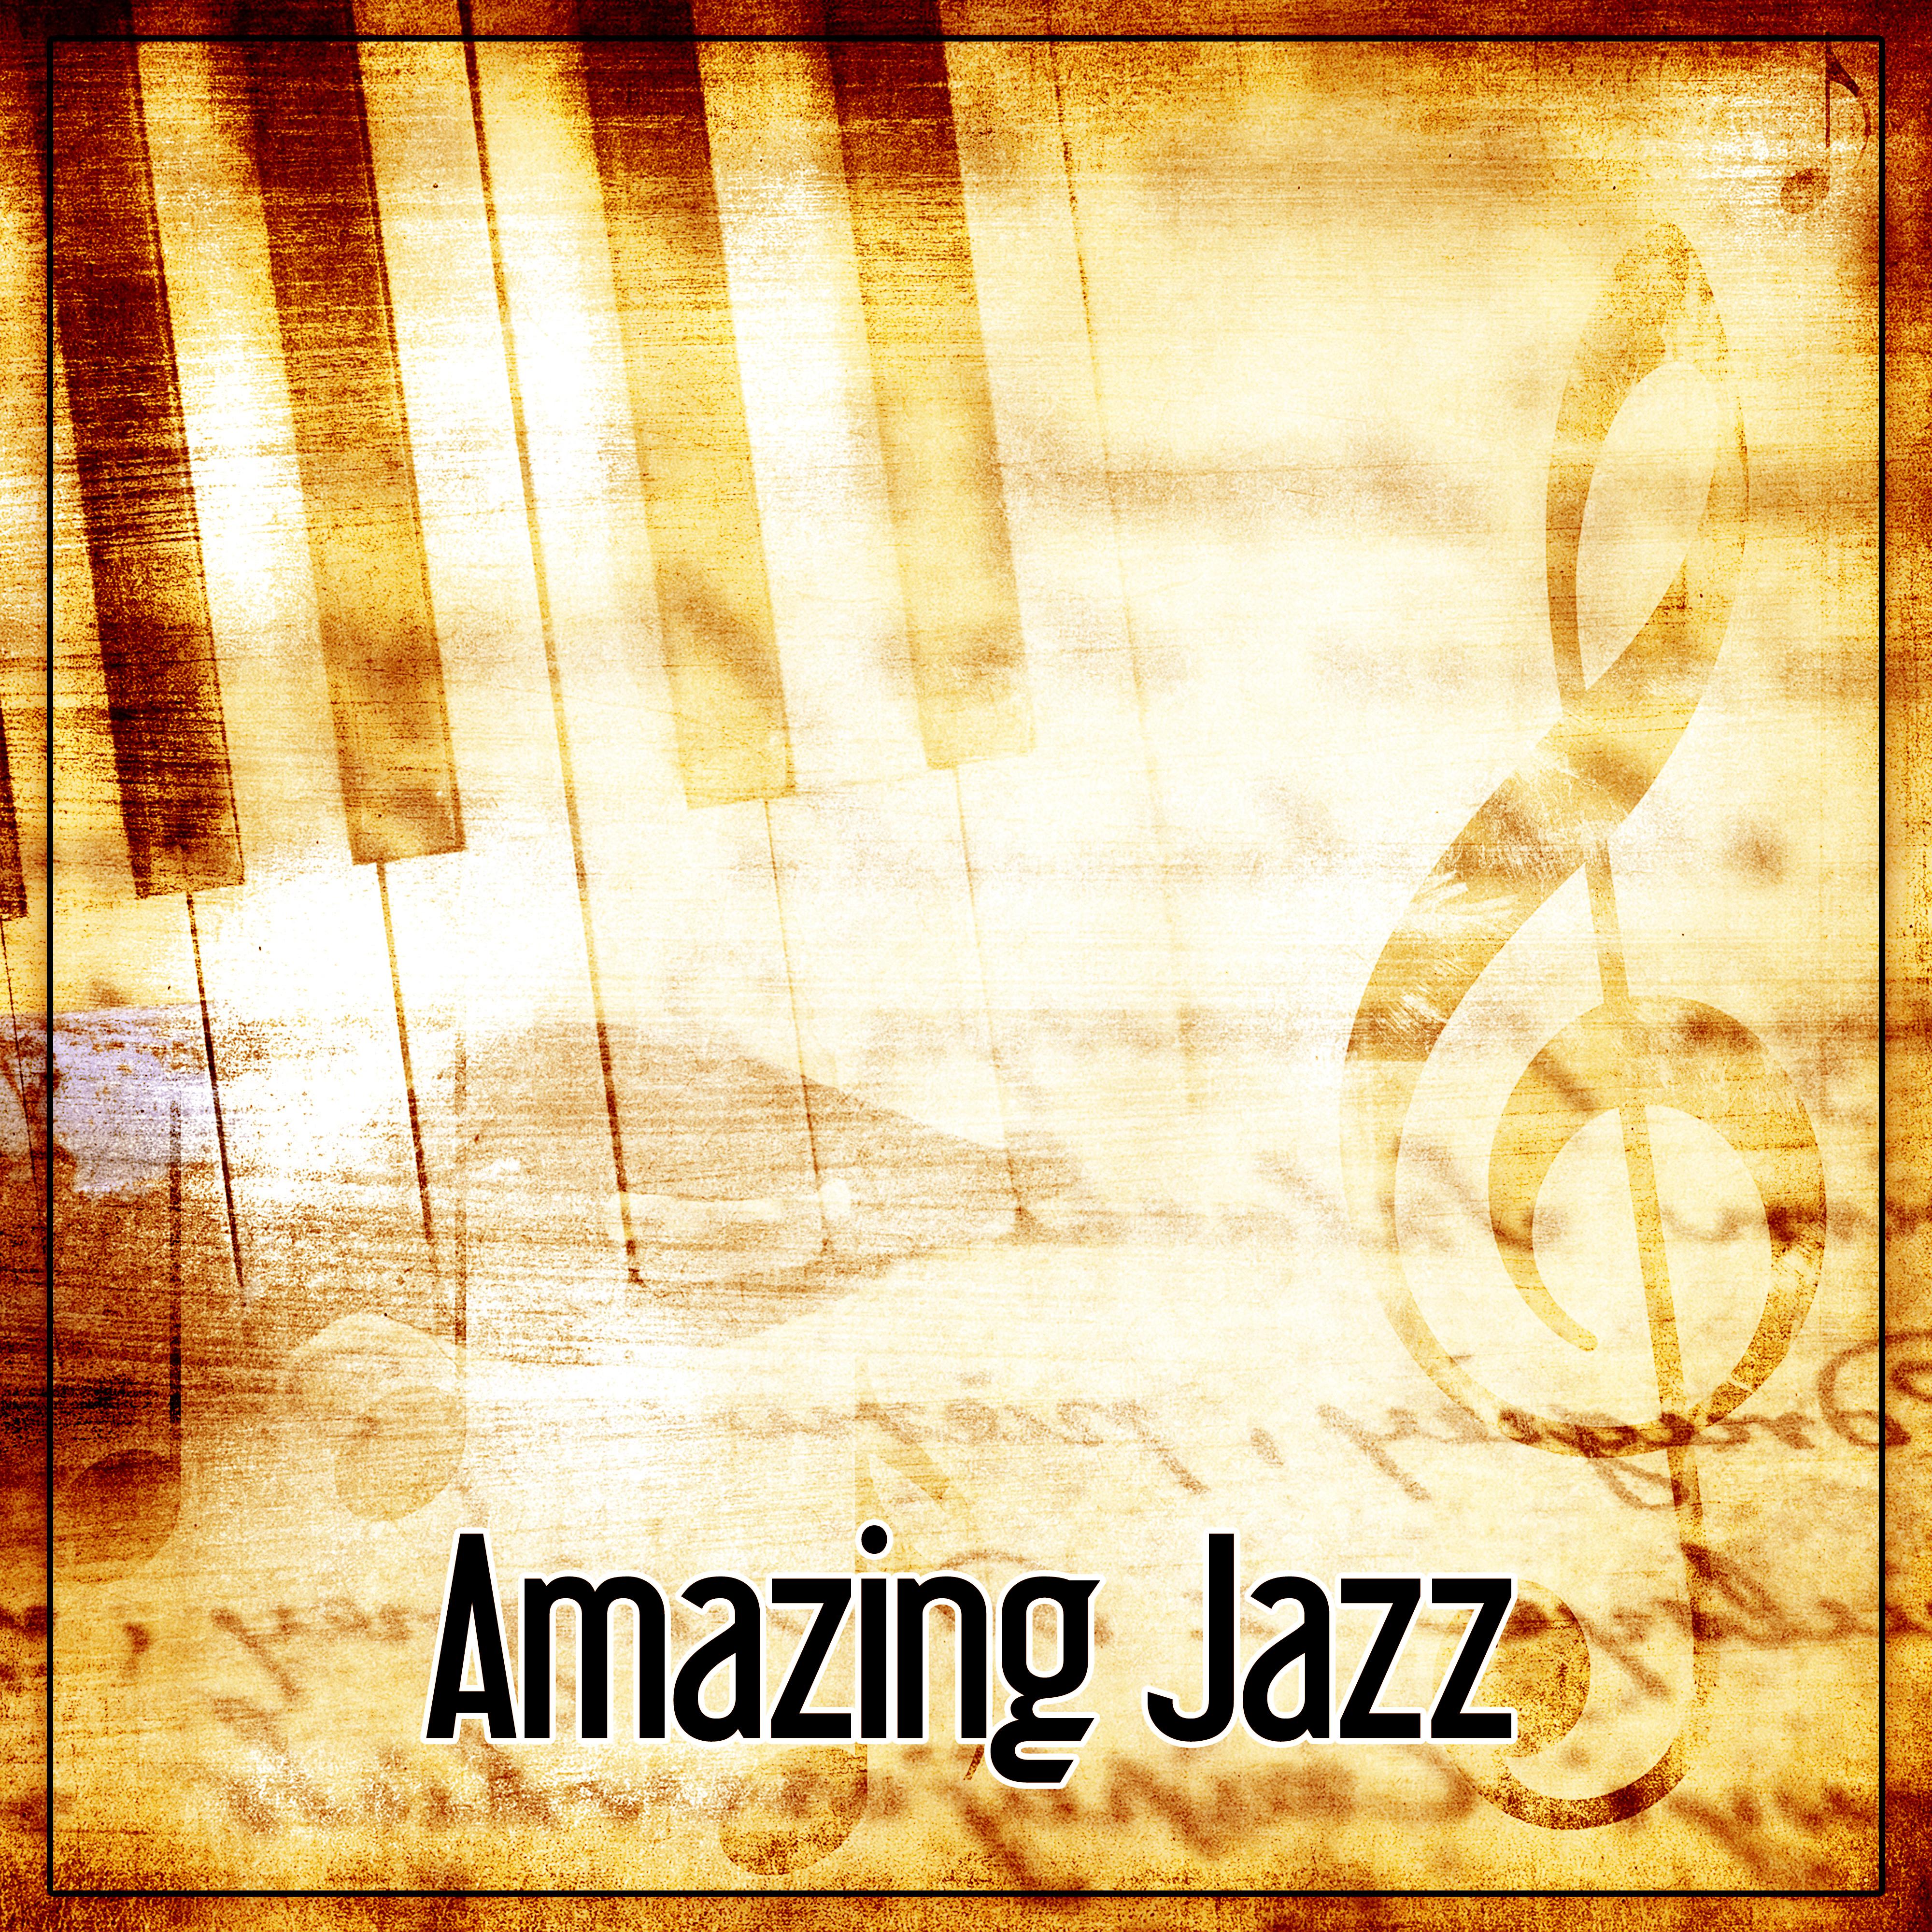 Amazing Jazz - Cafe Bar, Late Night Jazz, Sensual Piano Jazz